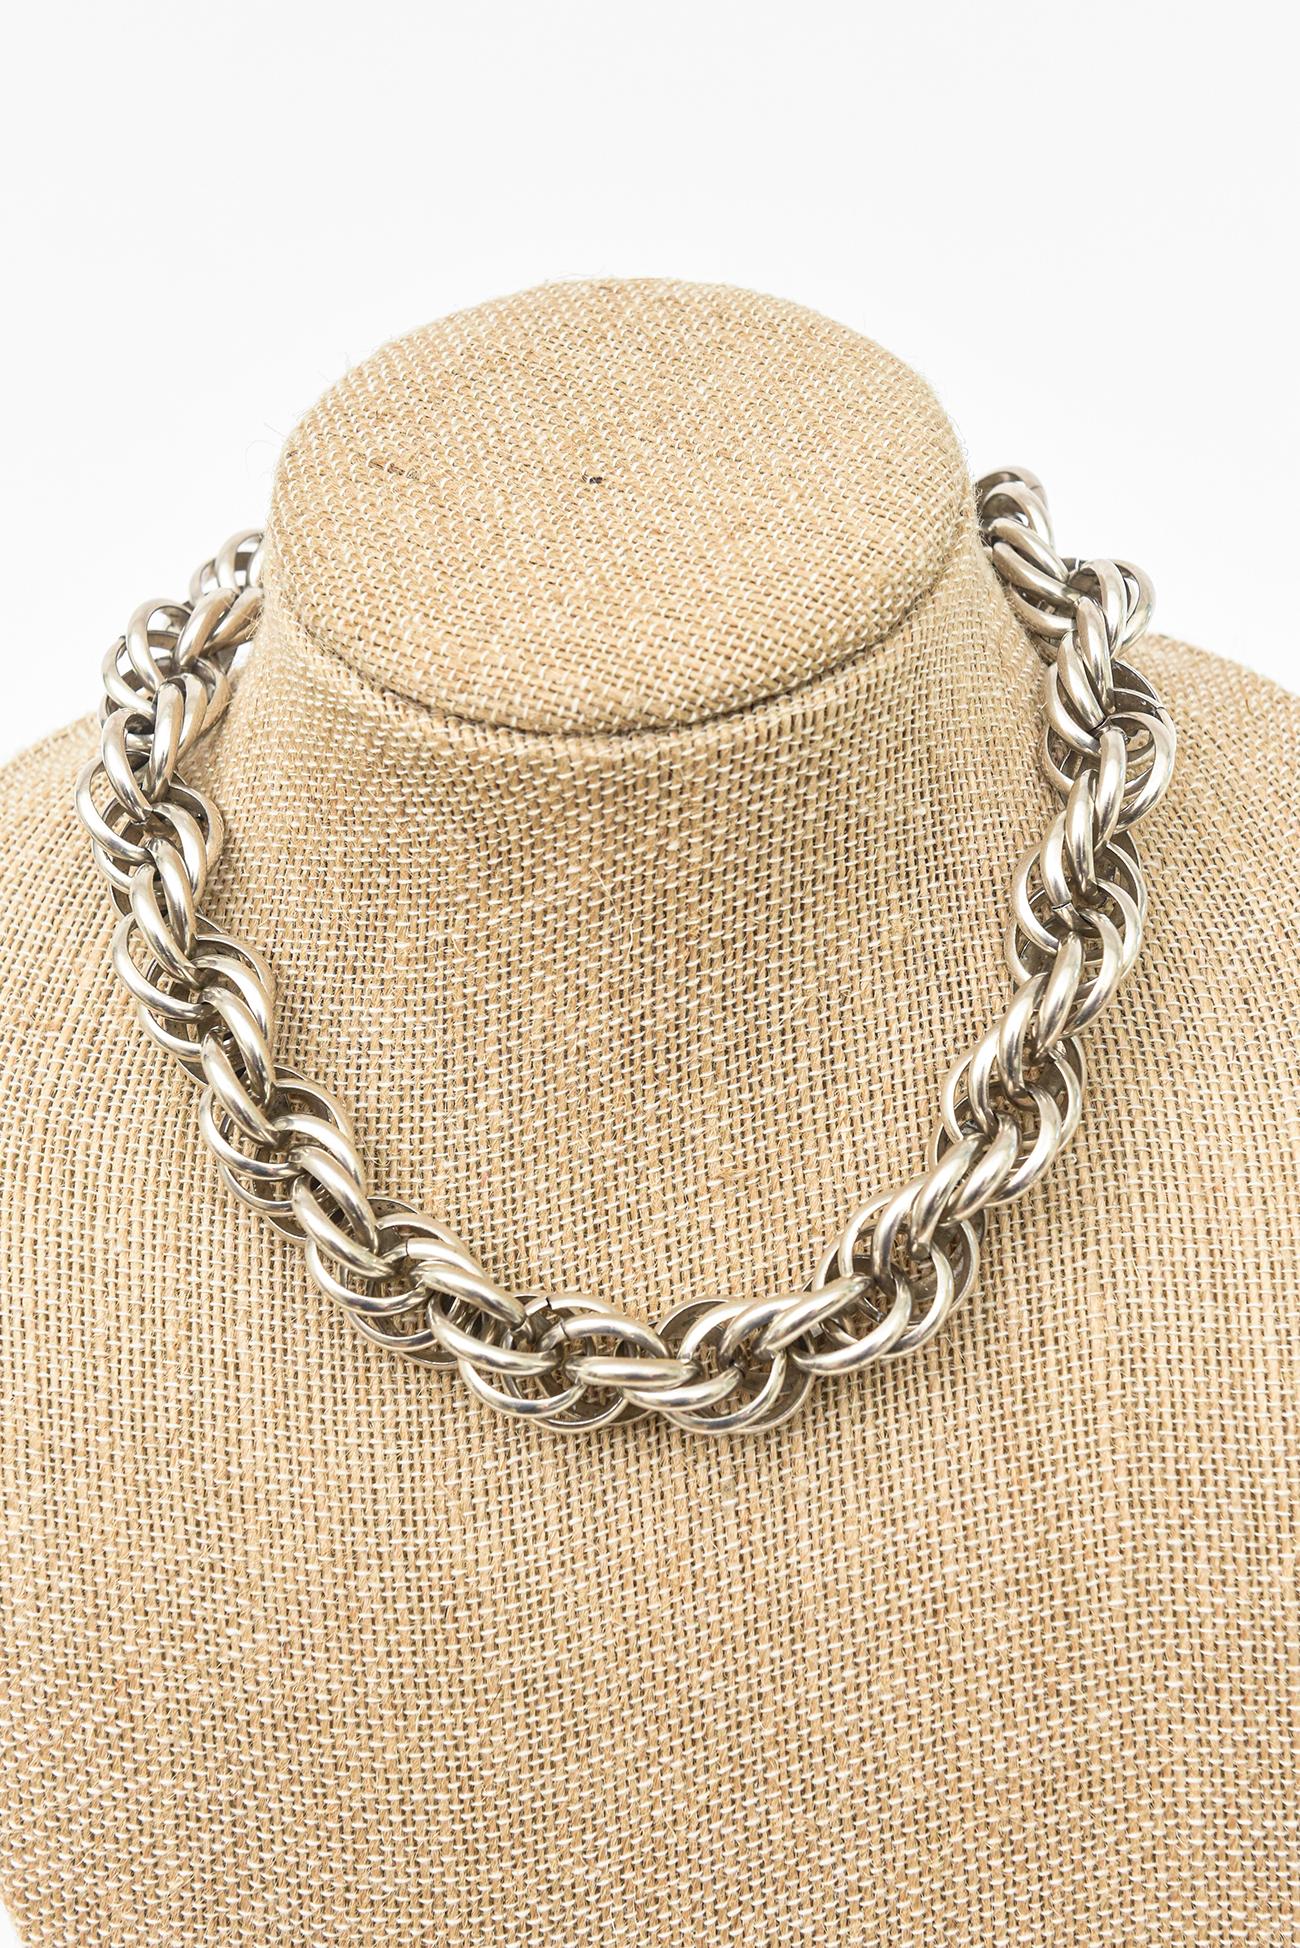 Sterling Silver Vintage Italian Hallmark Twisted Link Sculptural Collar Necklace For Sale 5